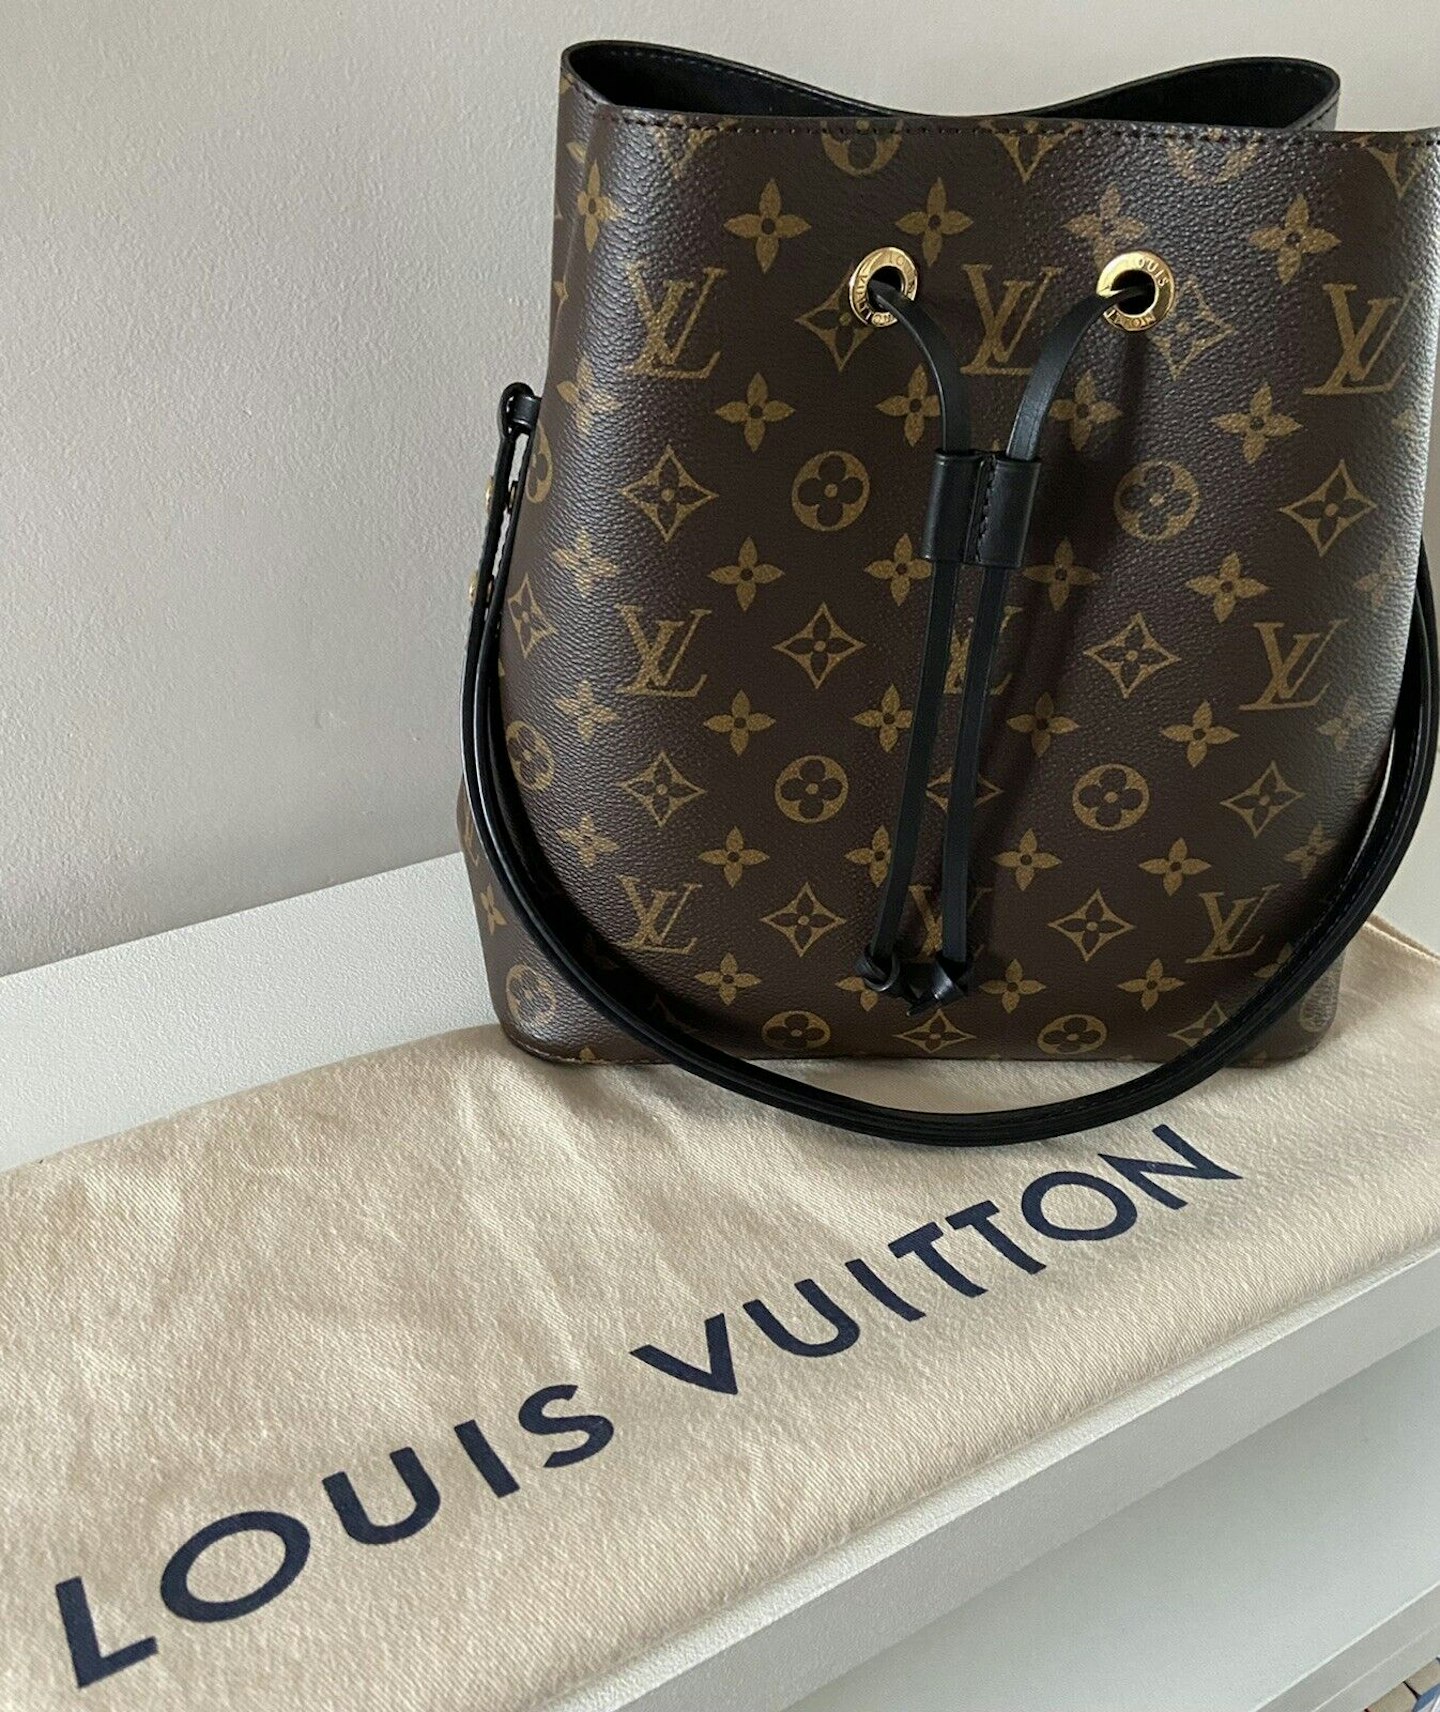 NeoNoe  Rent Louis Vuitton Handbags at Luxury Fashion Rentals